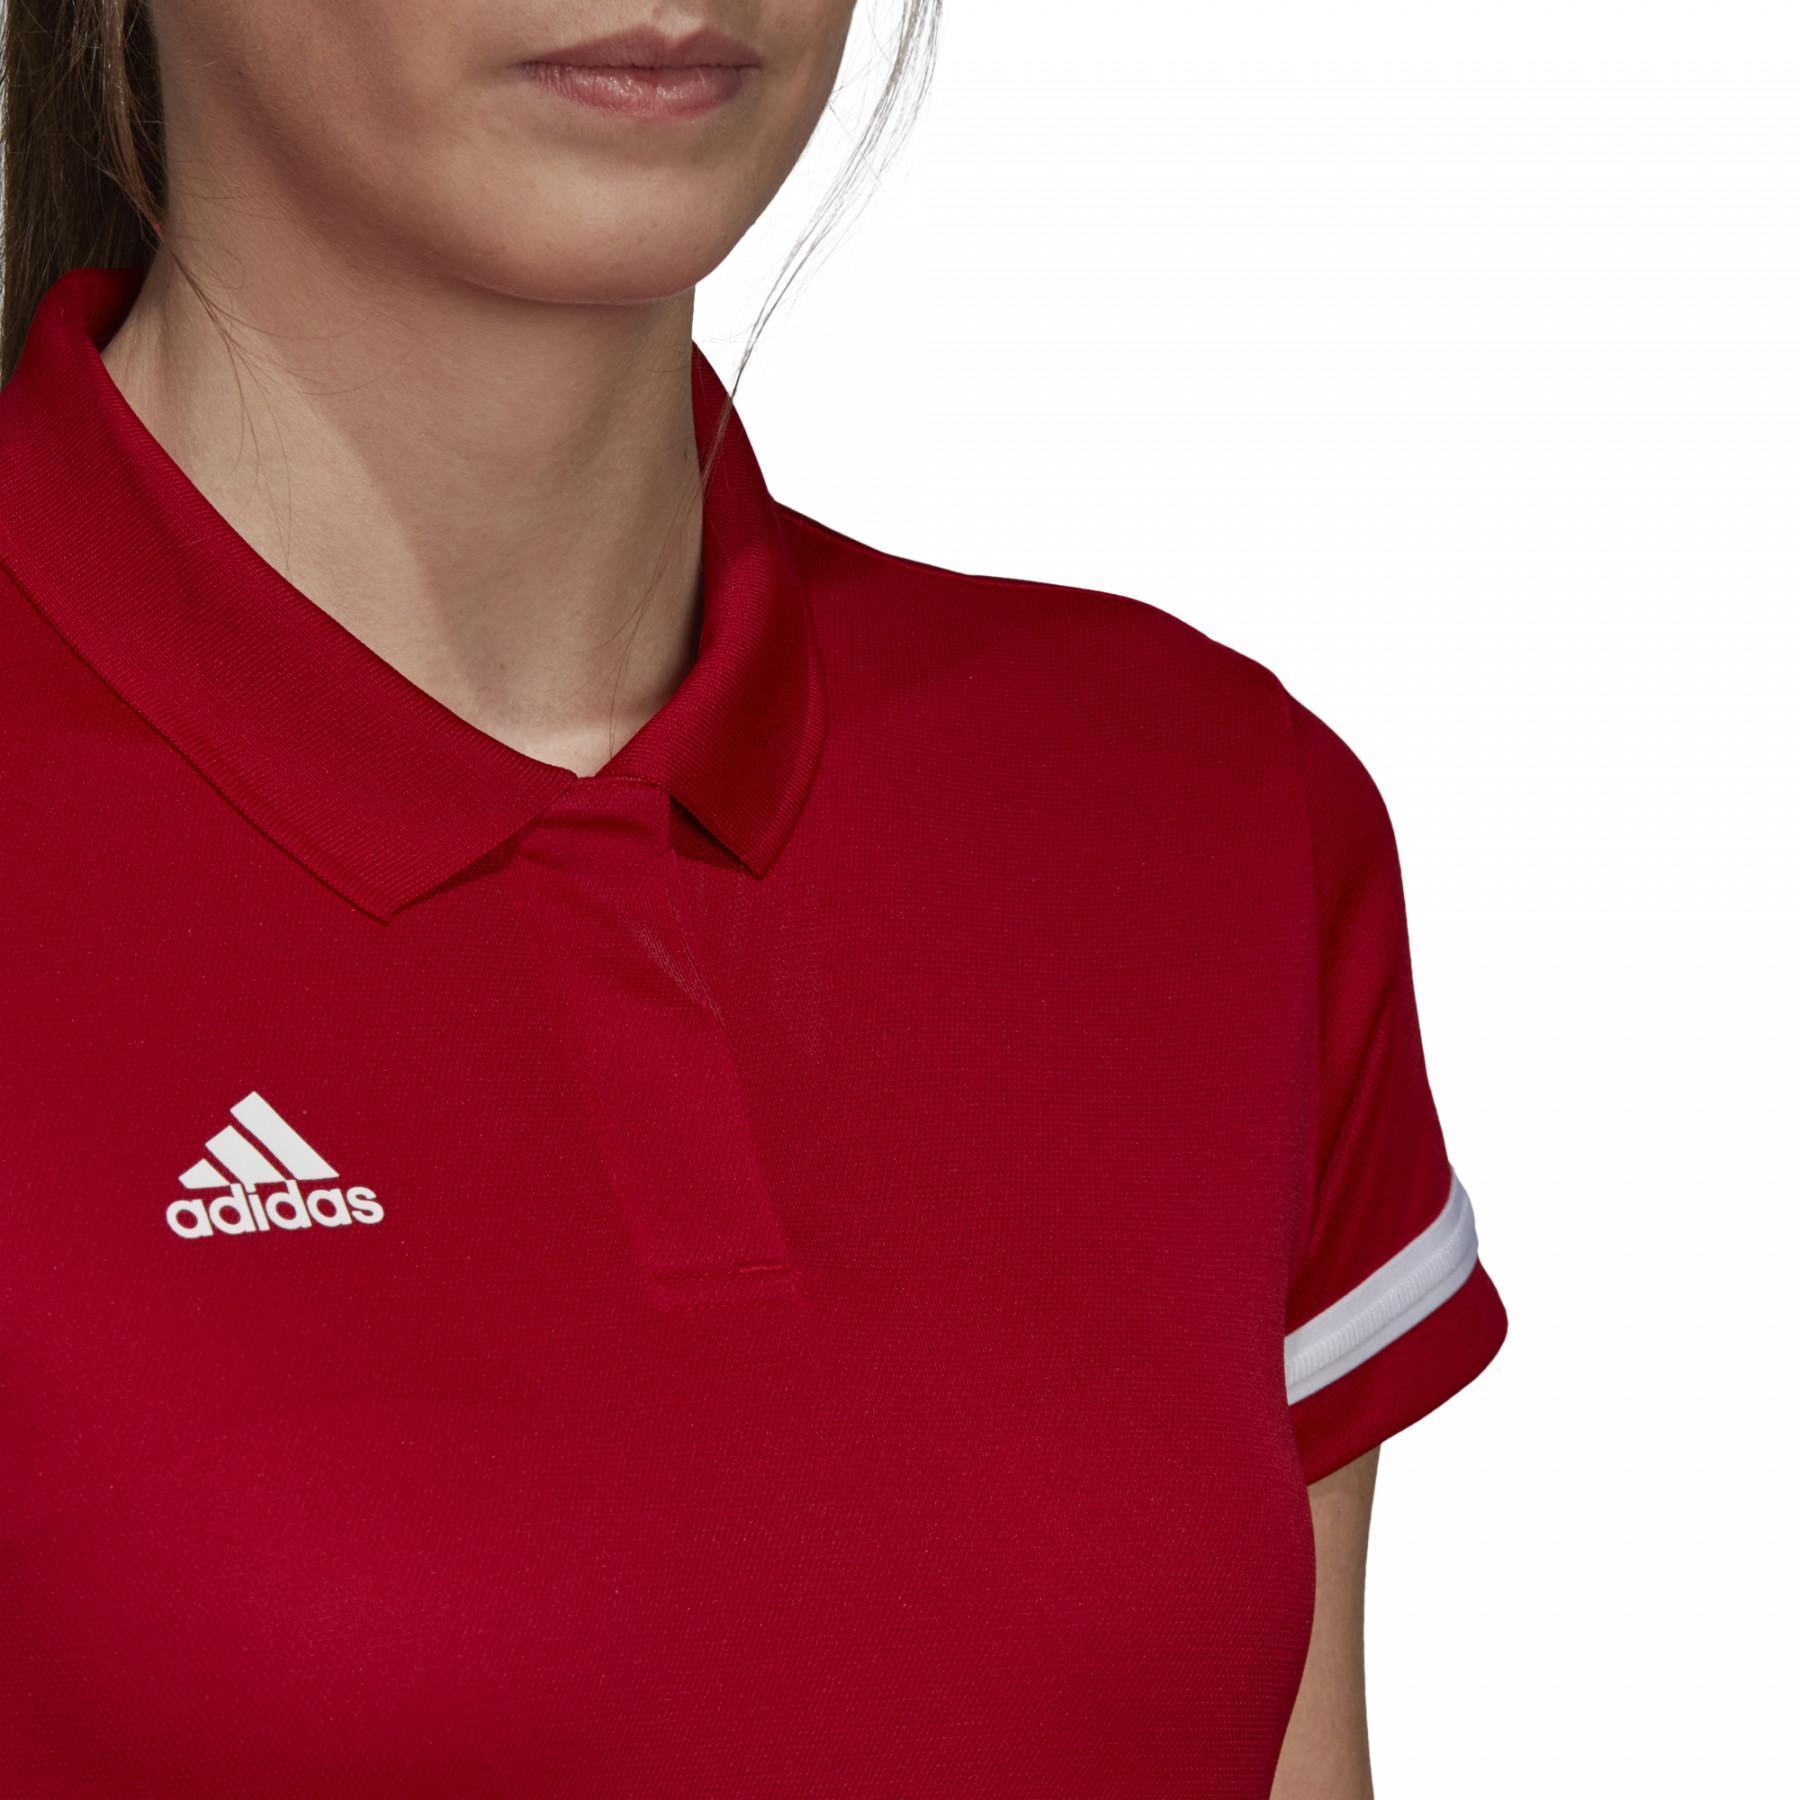 Women's polo shirt adidas Team 19